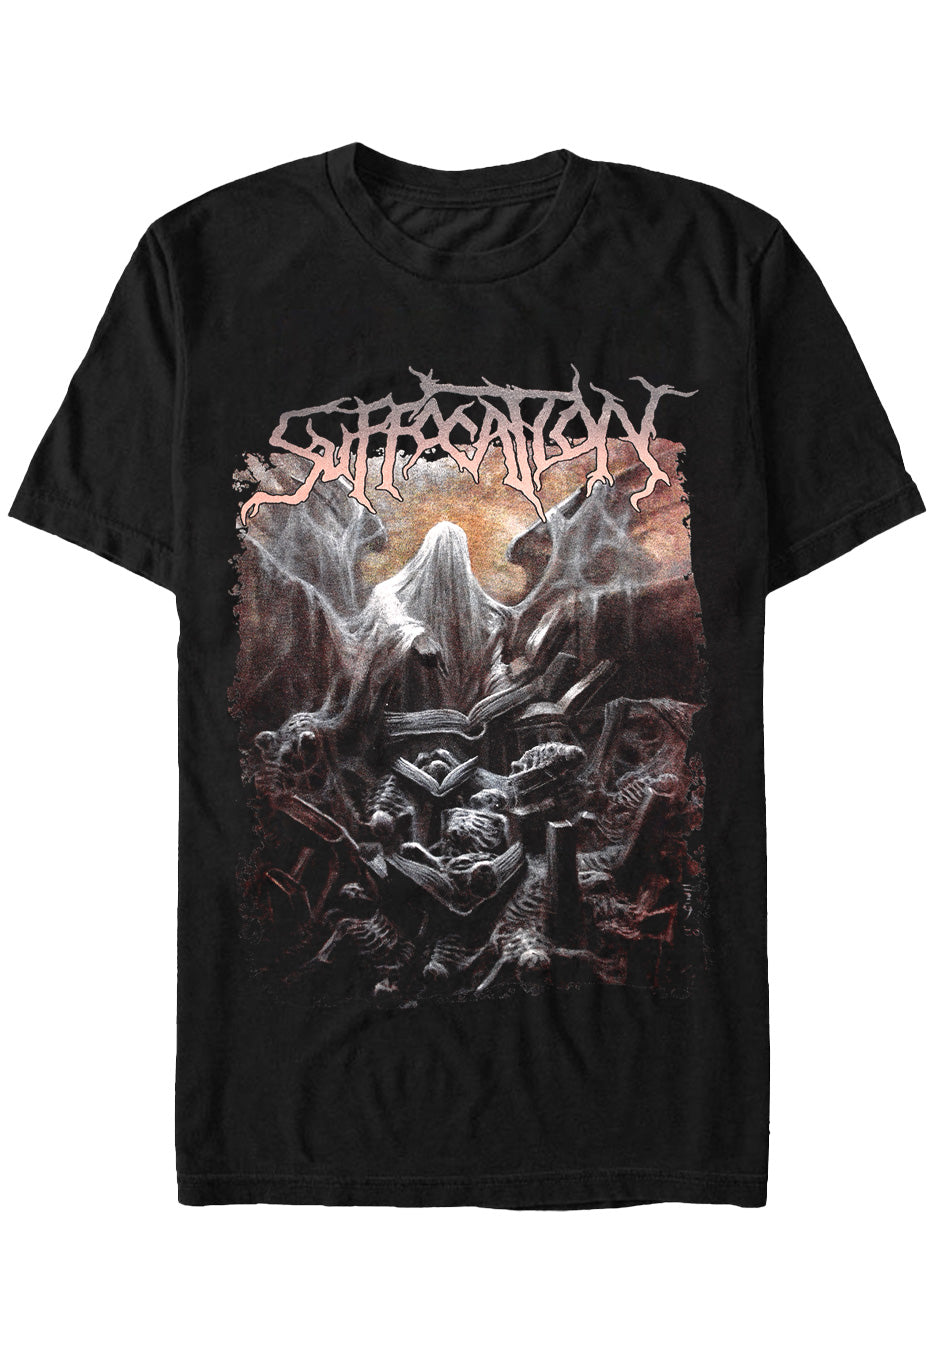 Suffocation - Abandon Hope - T-Shirt